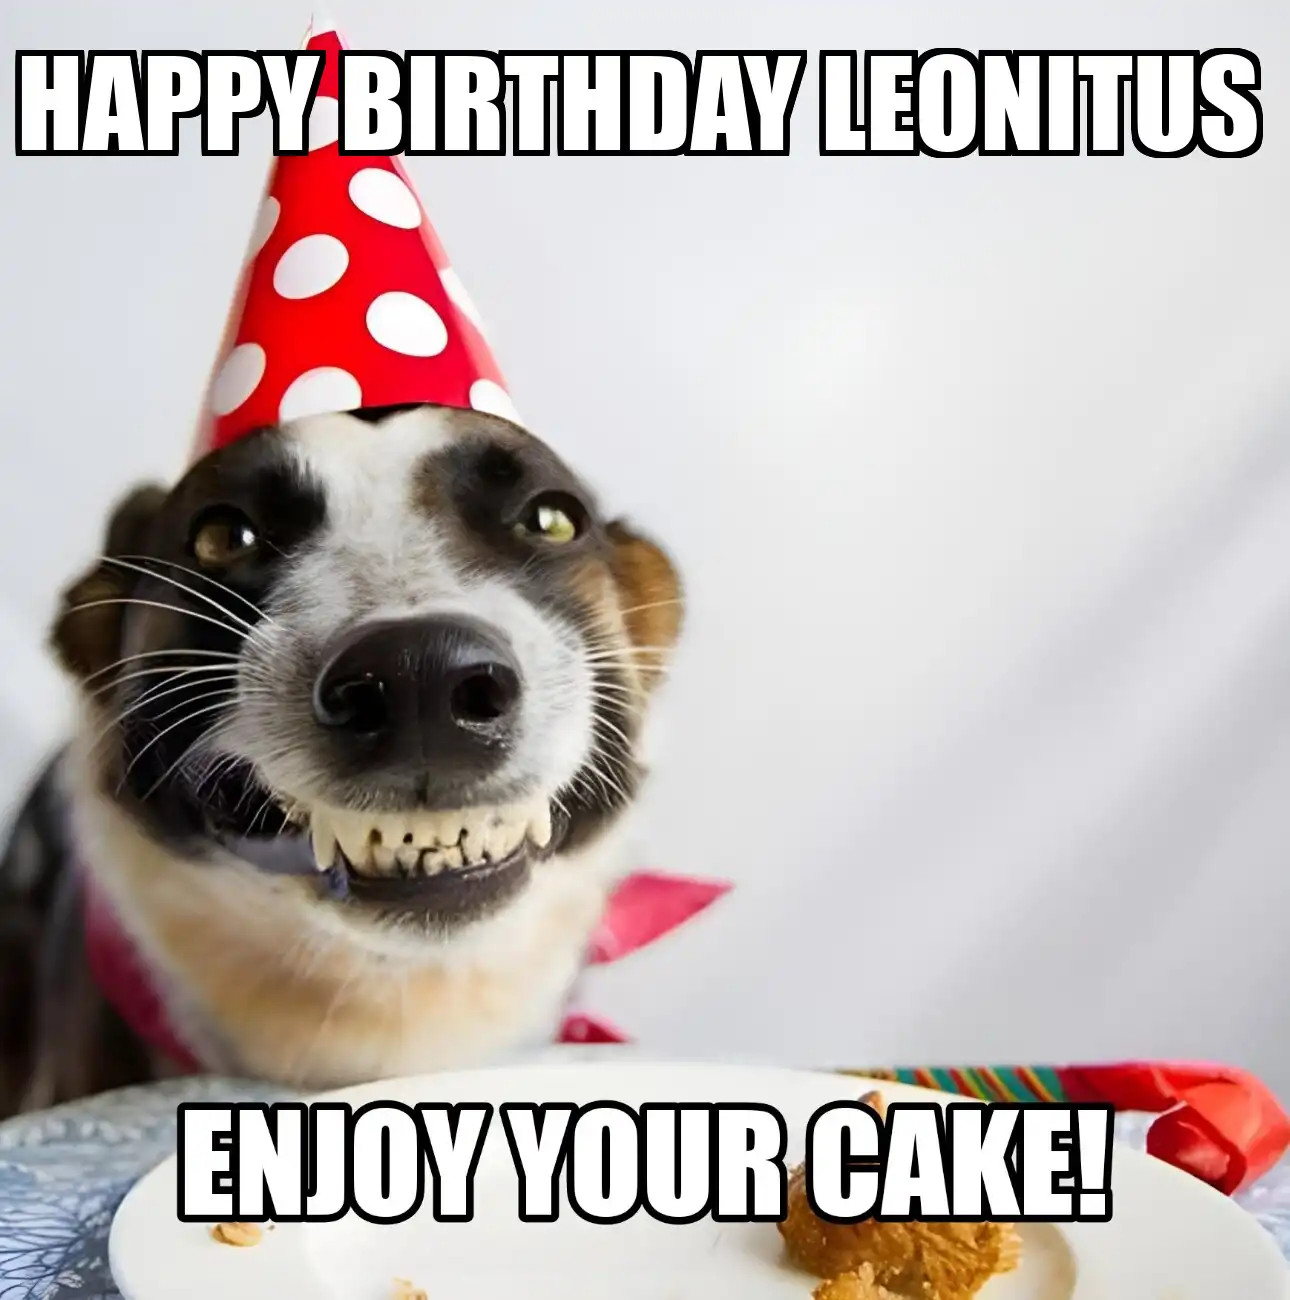 Happy Birthday Leonitus Enjoy Your Cake Dog Meme